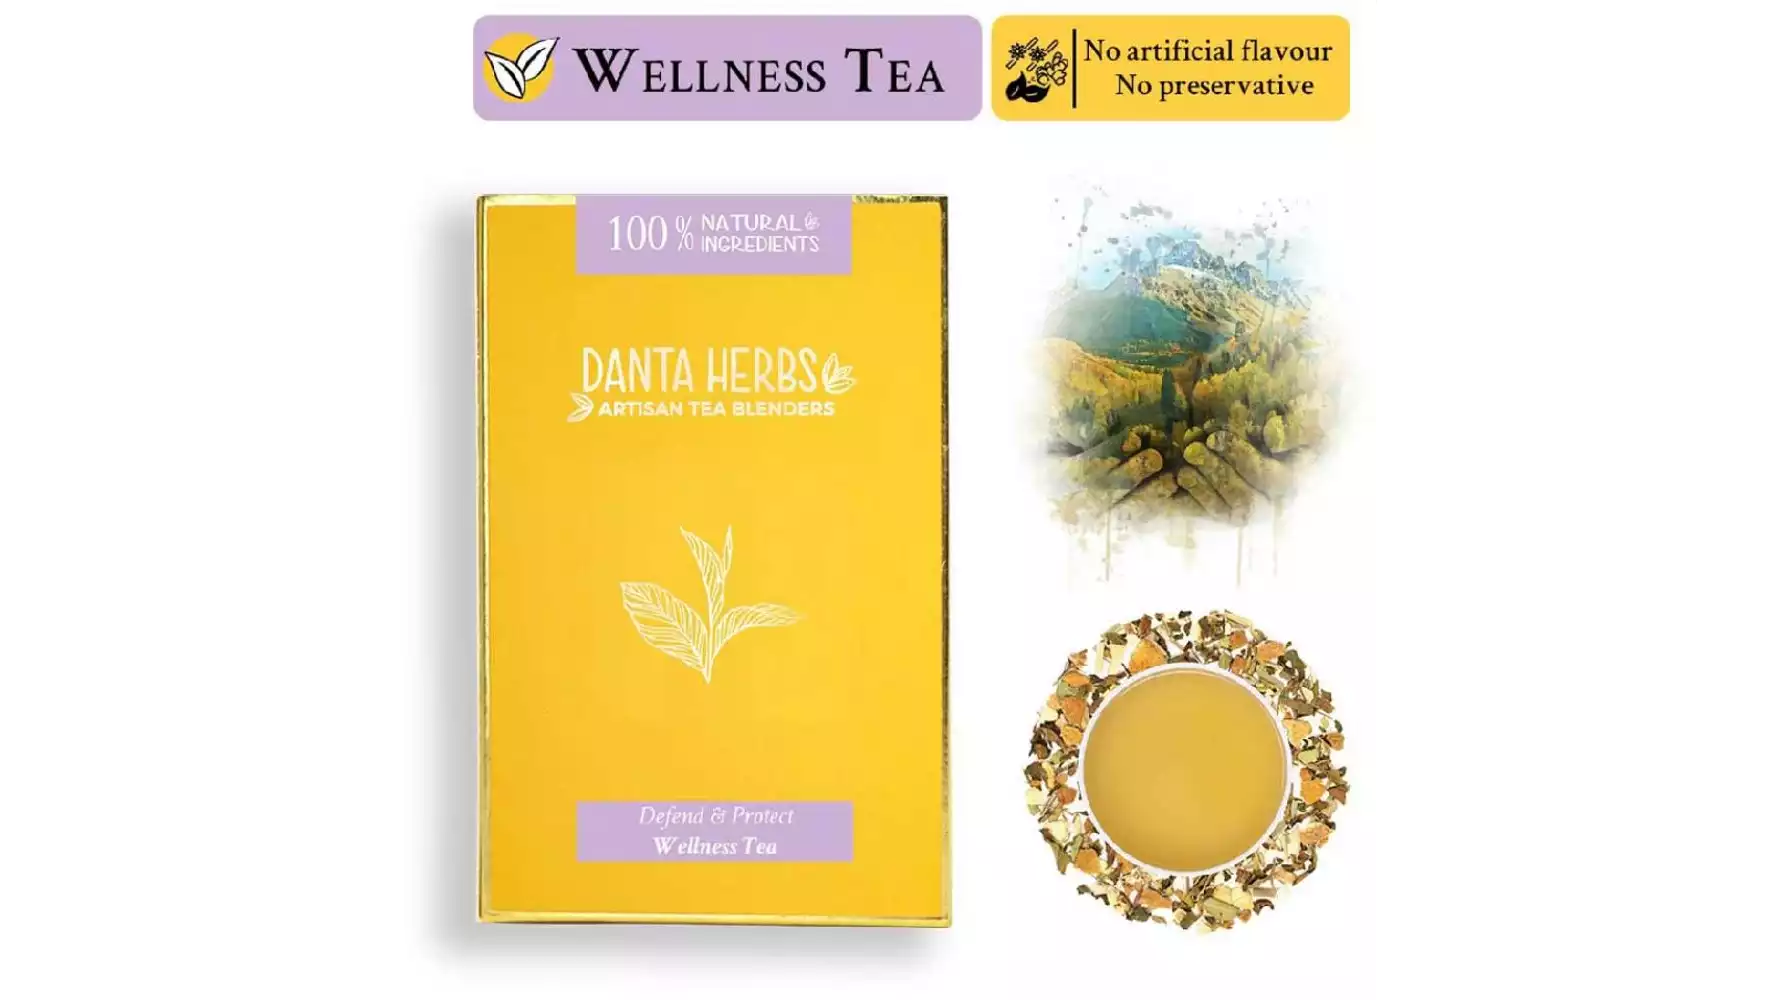 Danta Herbs Defend & Protect Wellness Tea (100g)